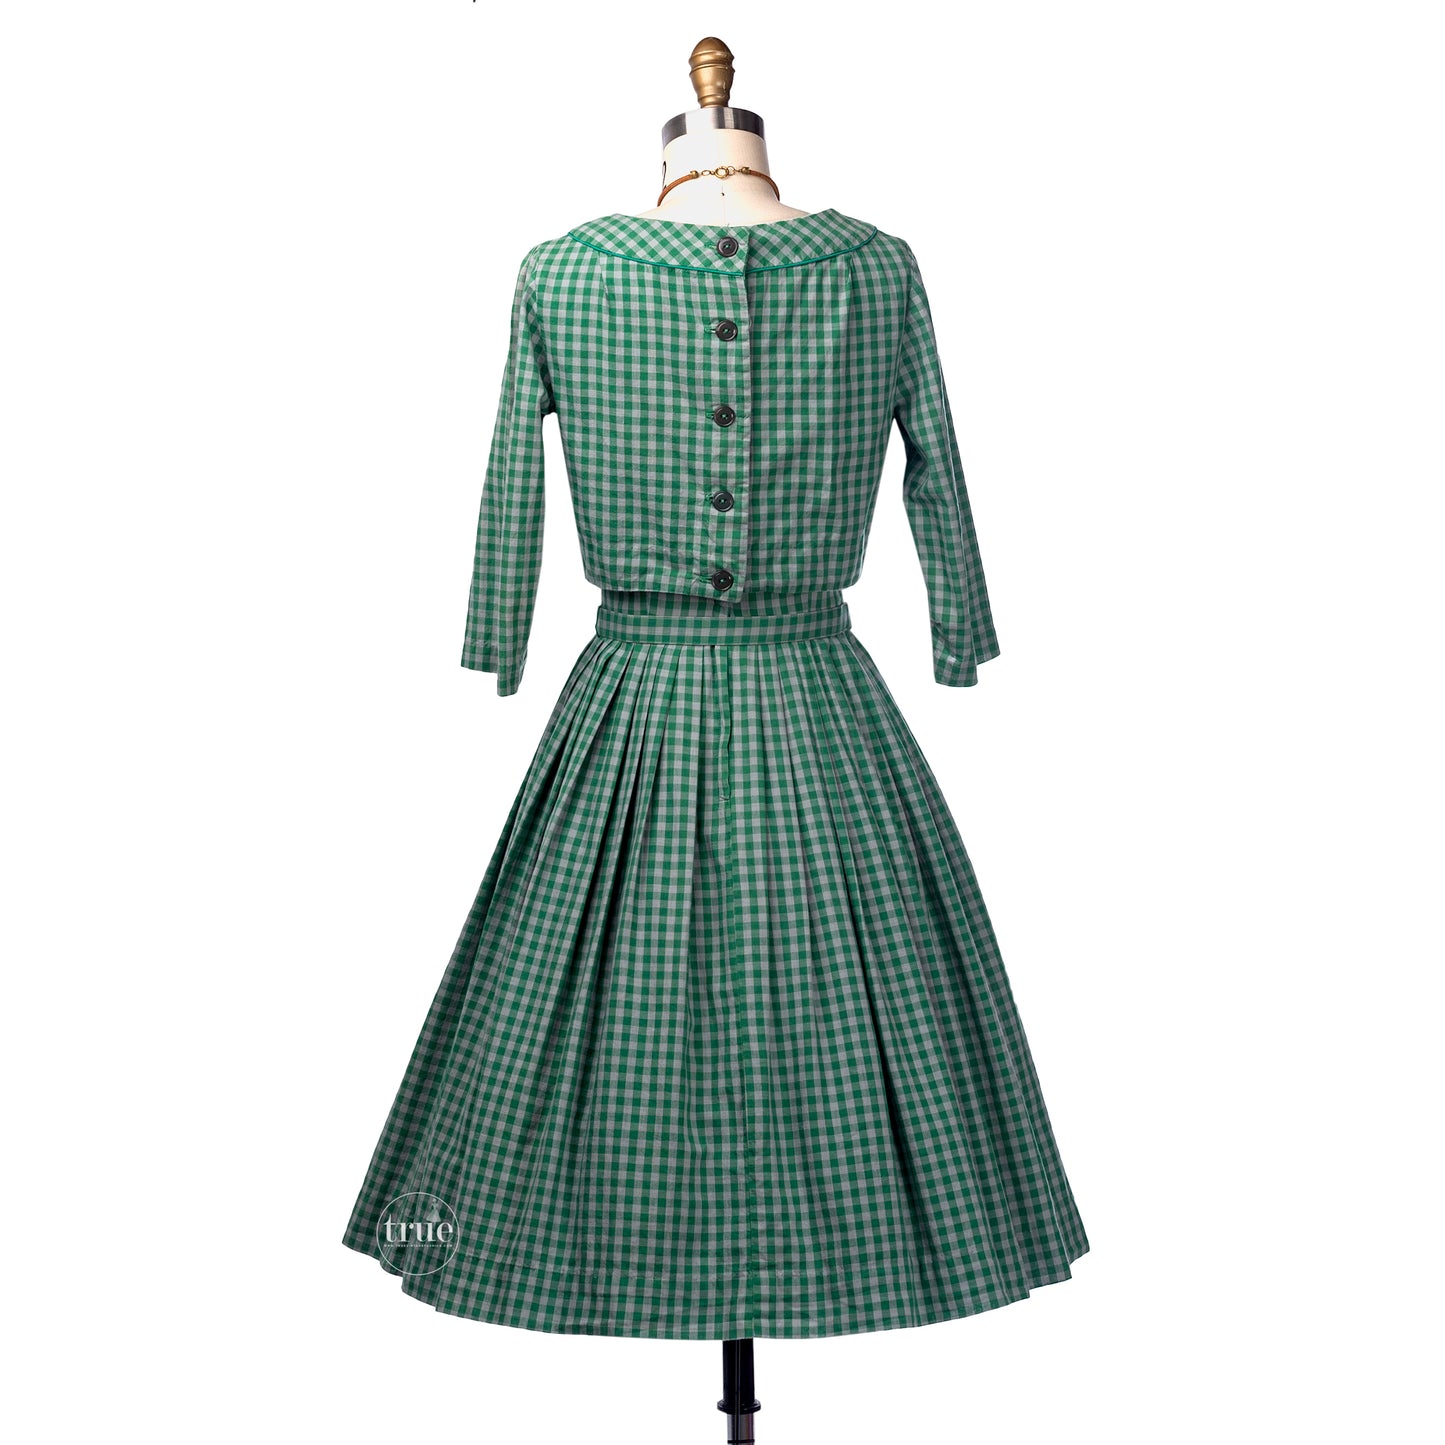 vintage 1950's dress ...fab Carol Brent green gingham full skirt dress & jacket